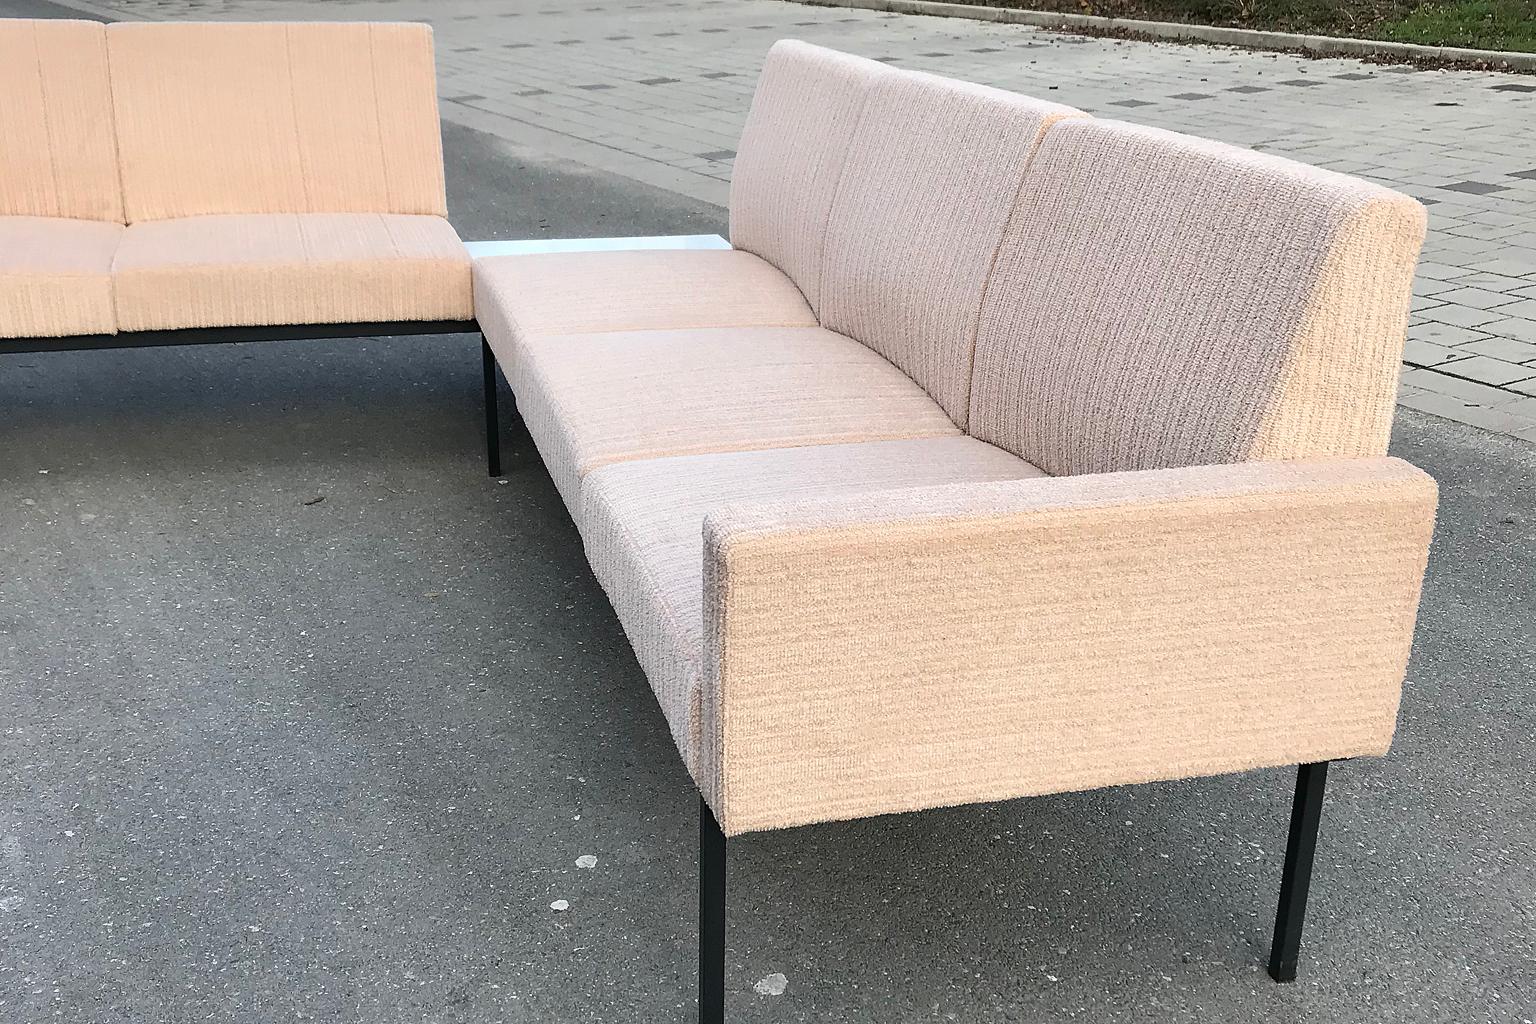 Modular Seating Group from Thonet, 1960s, Seating Elements, Lobby Sofa Beige  (Moderne der Mitte des Jahrhunderts)